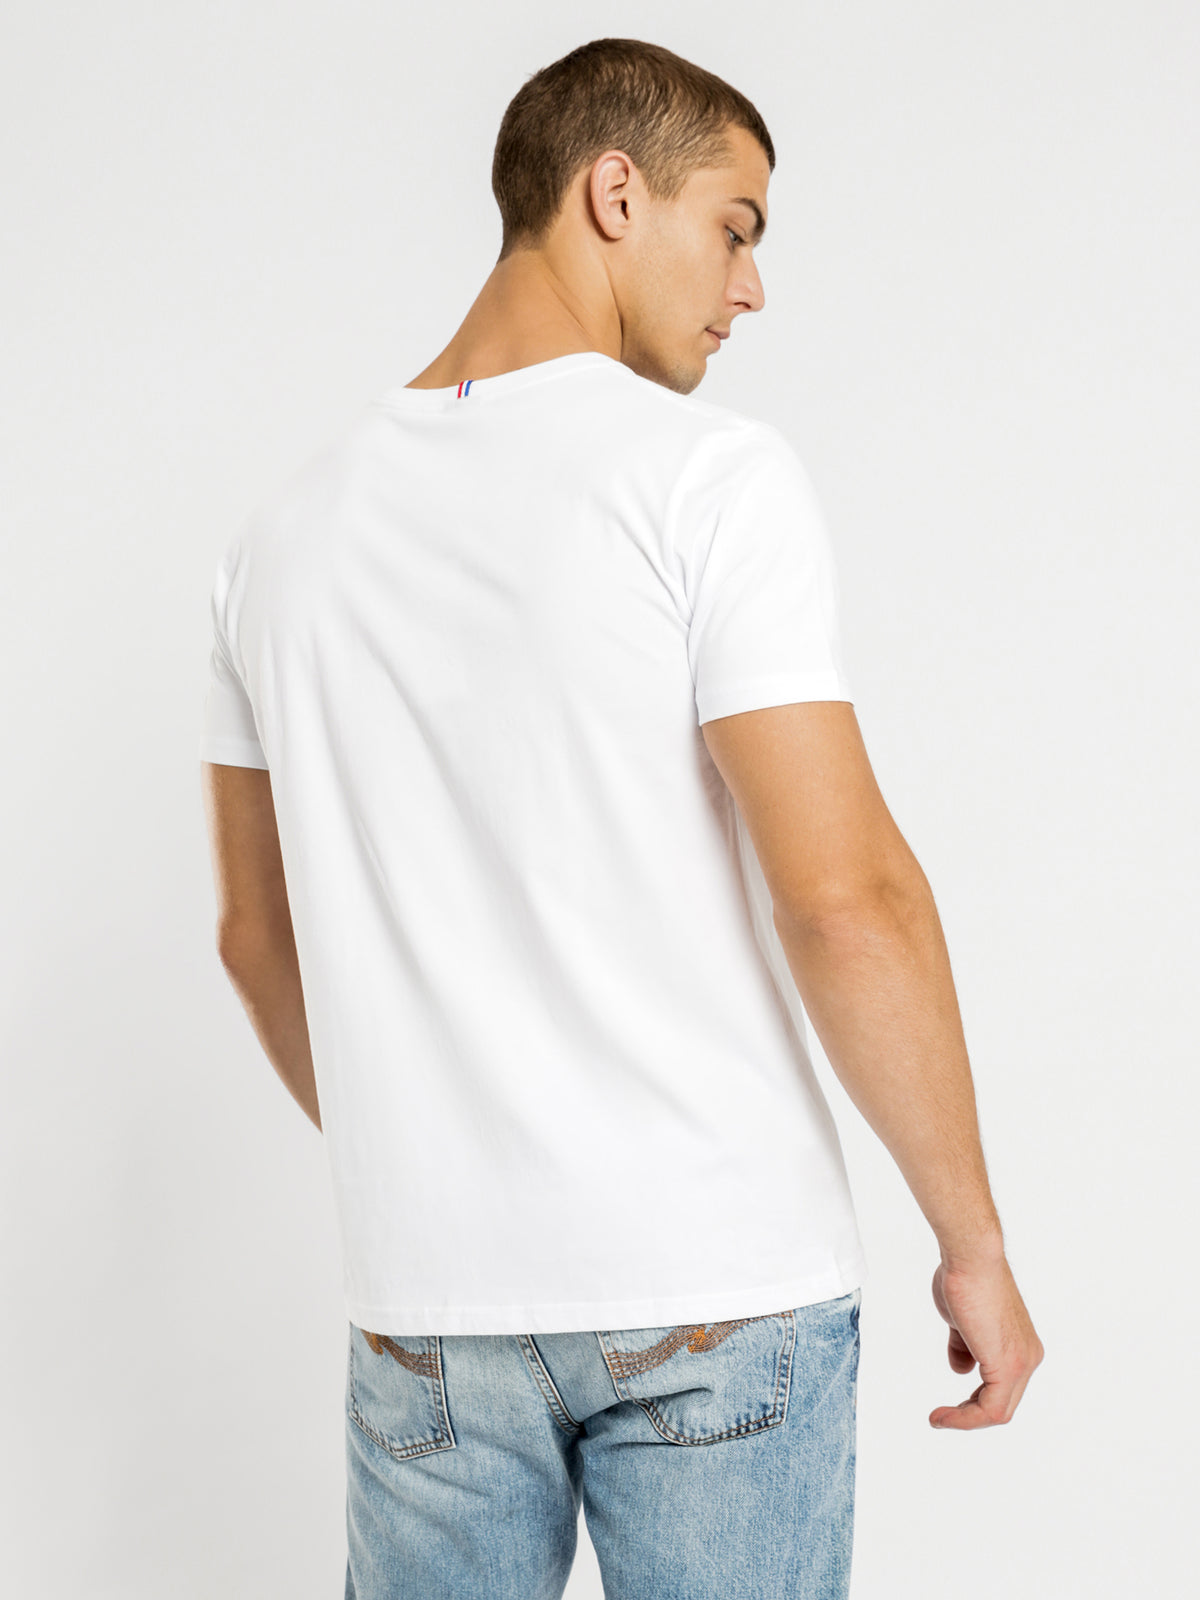 Cabal Stripe T-Shirt in White